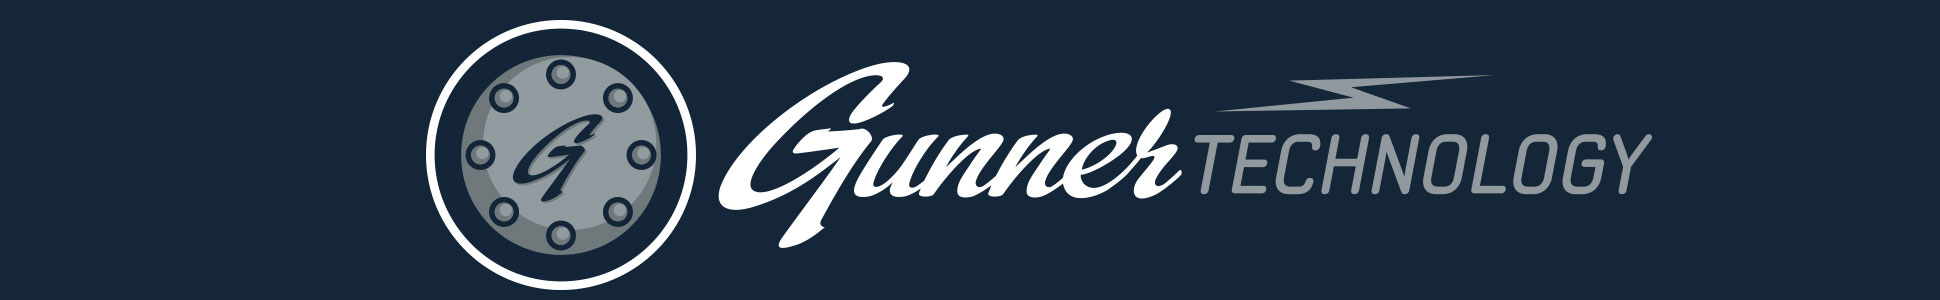 Gunner Technology